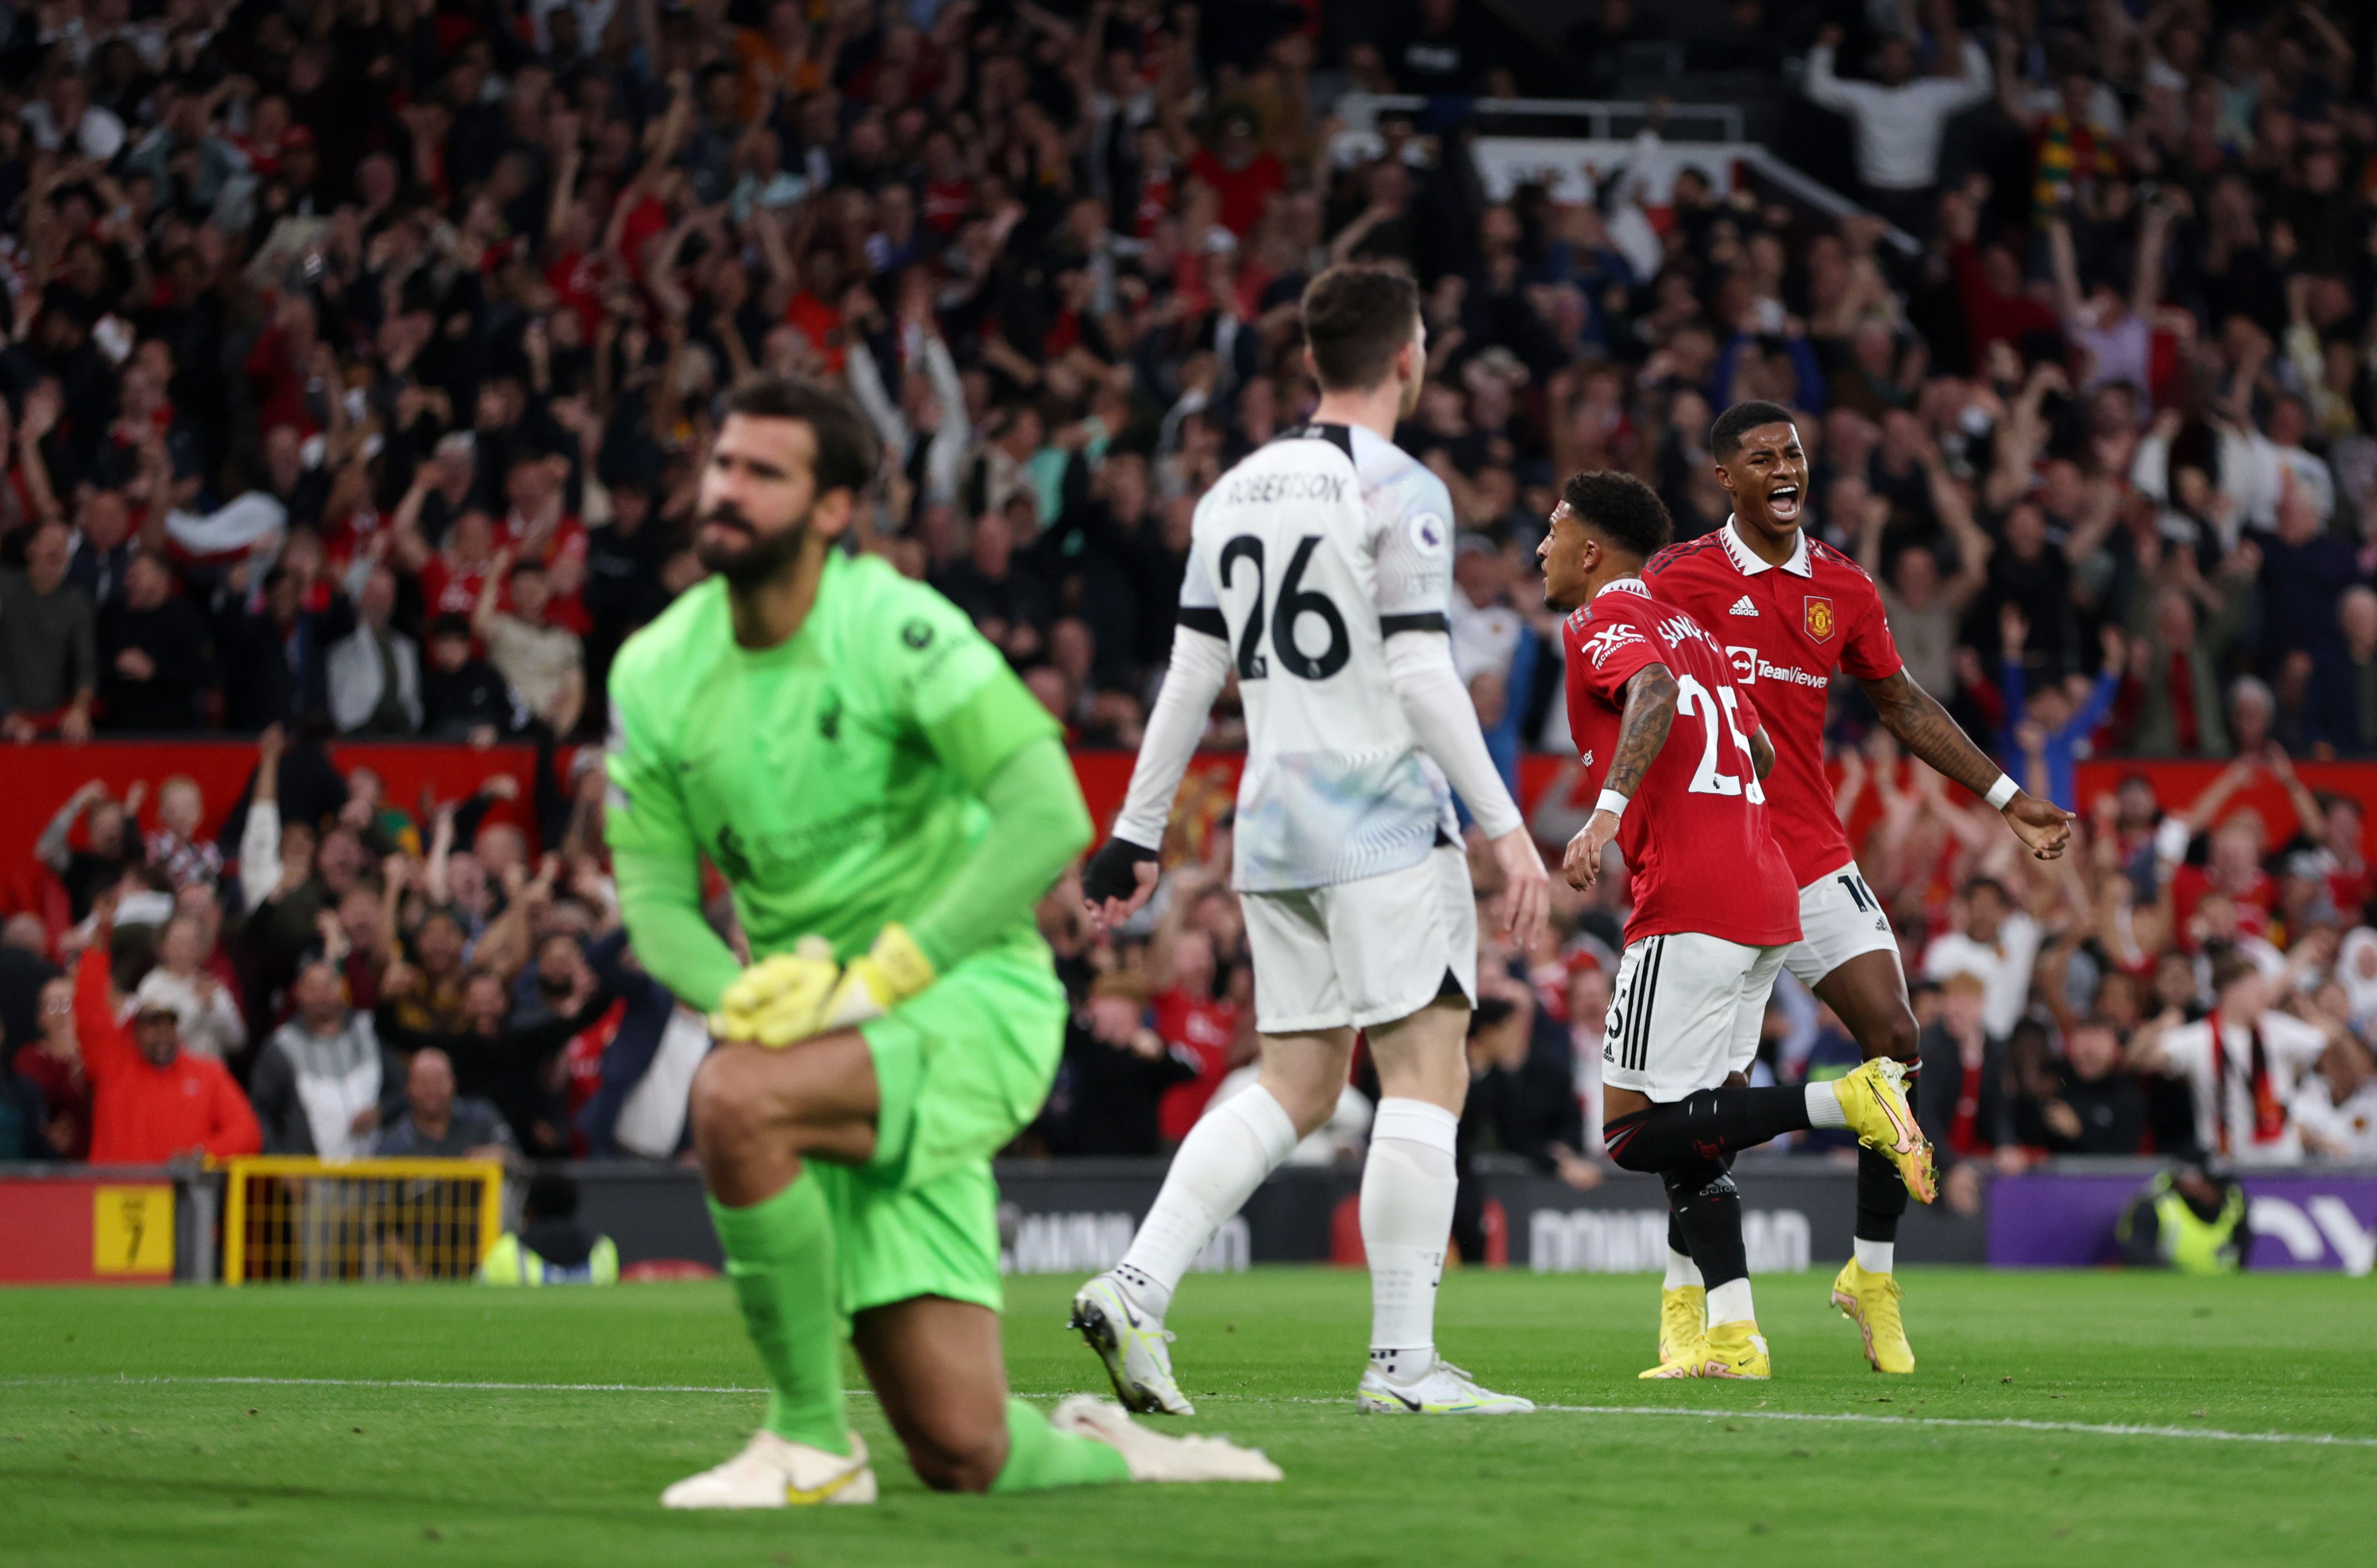 Manchester United celebrate goal vs Liverpool